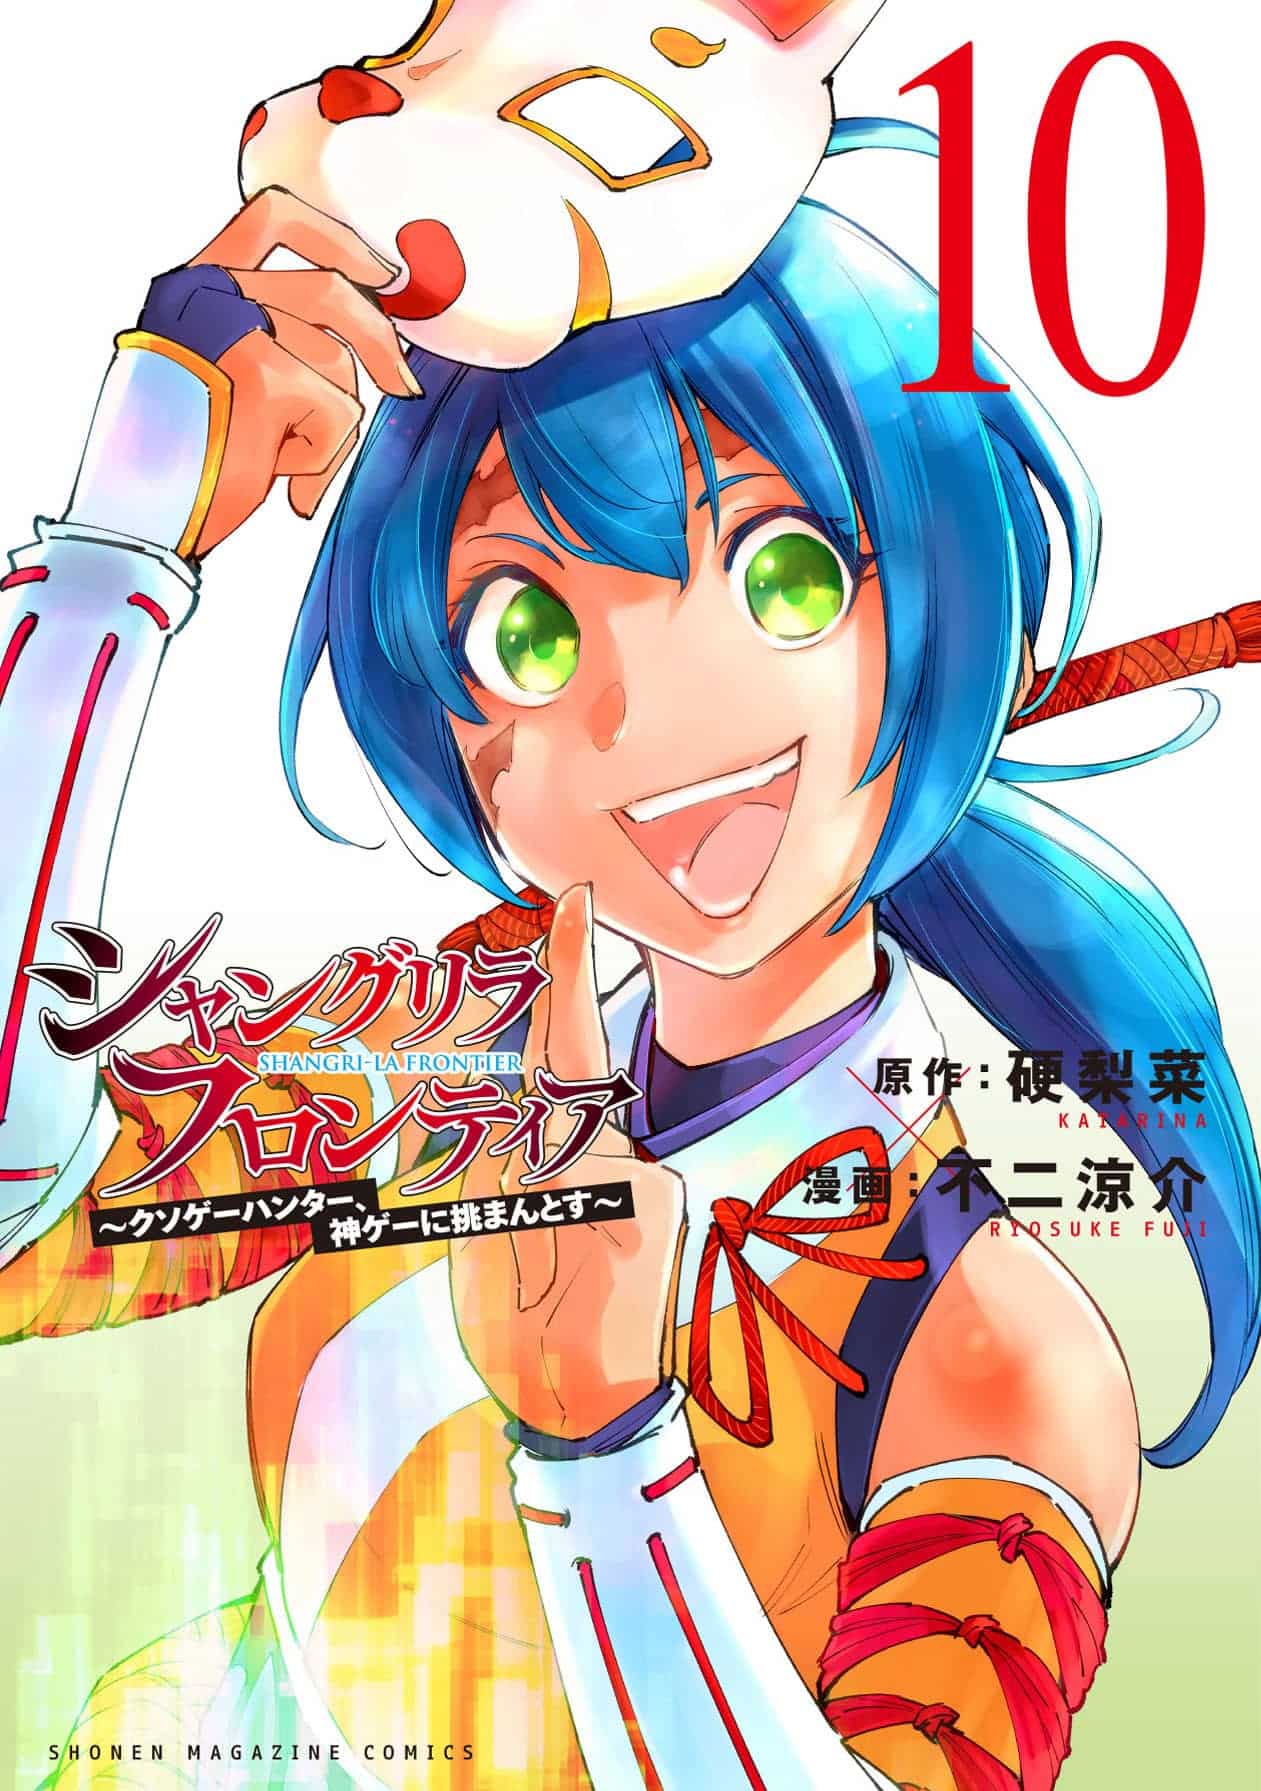 Shangri La Frontier Manga Vol 10